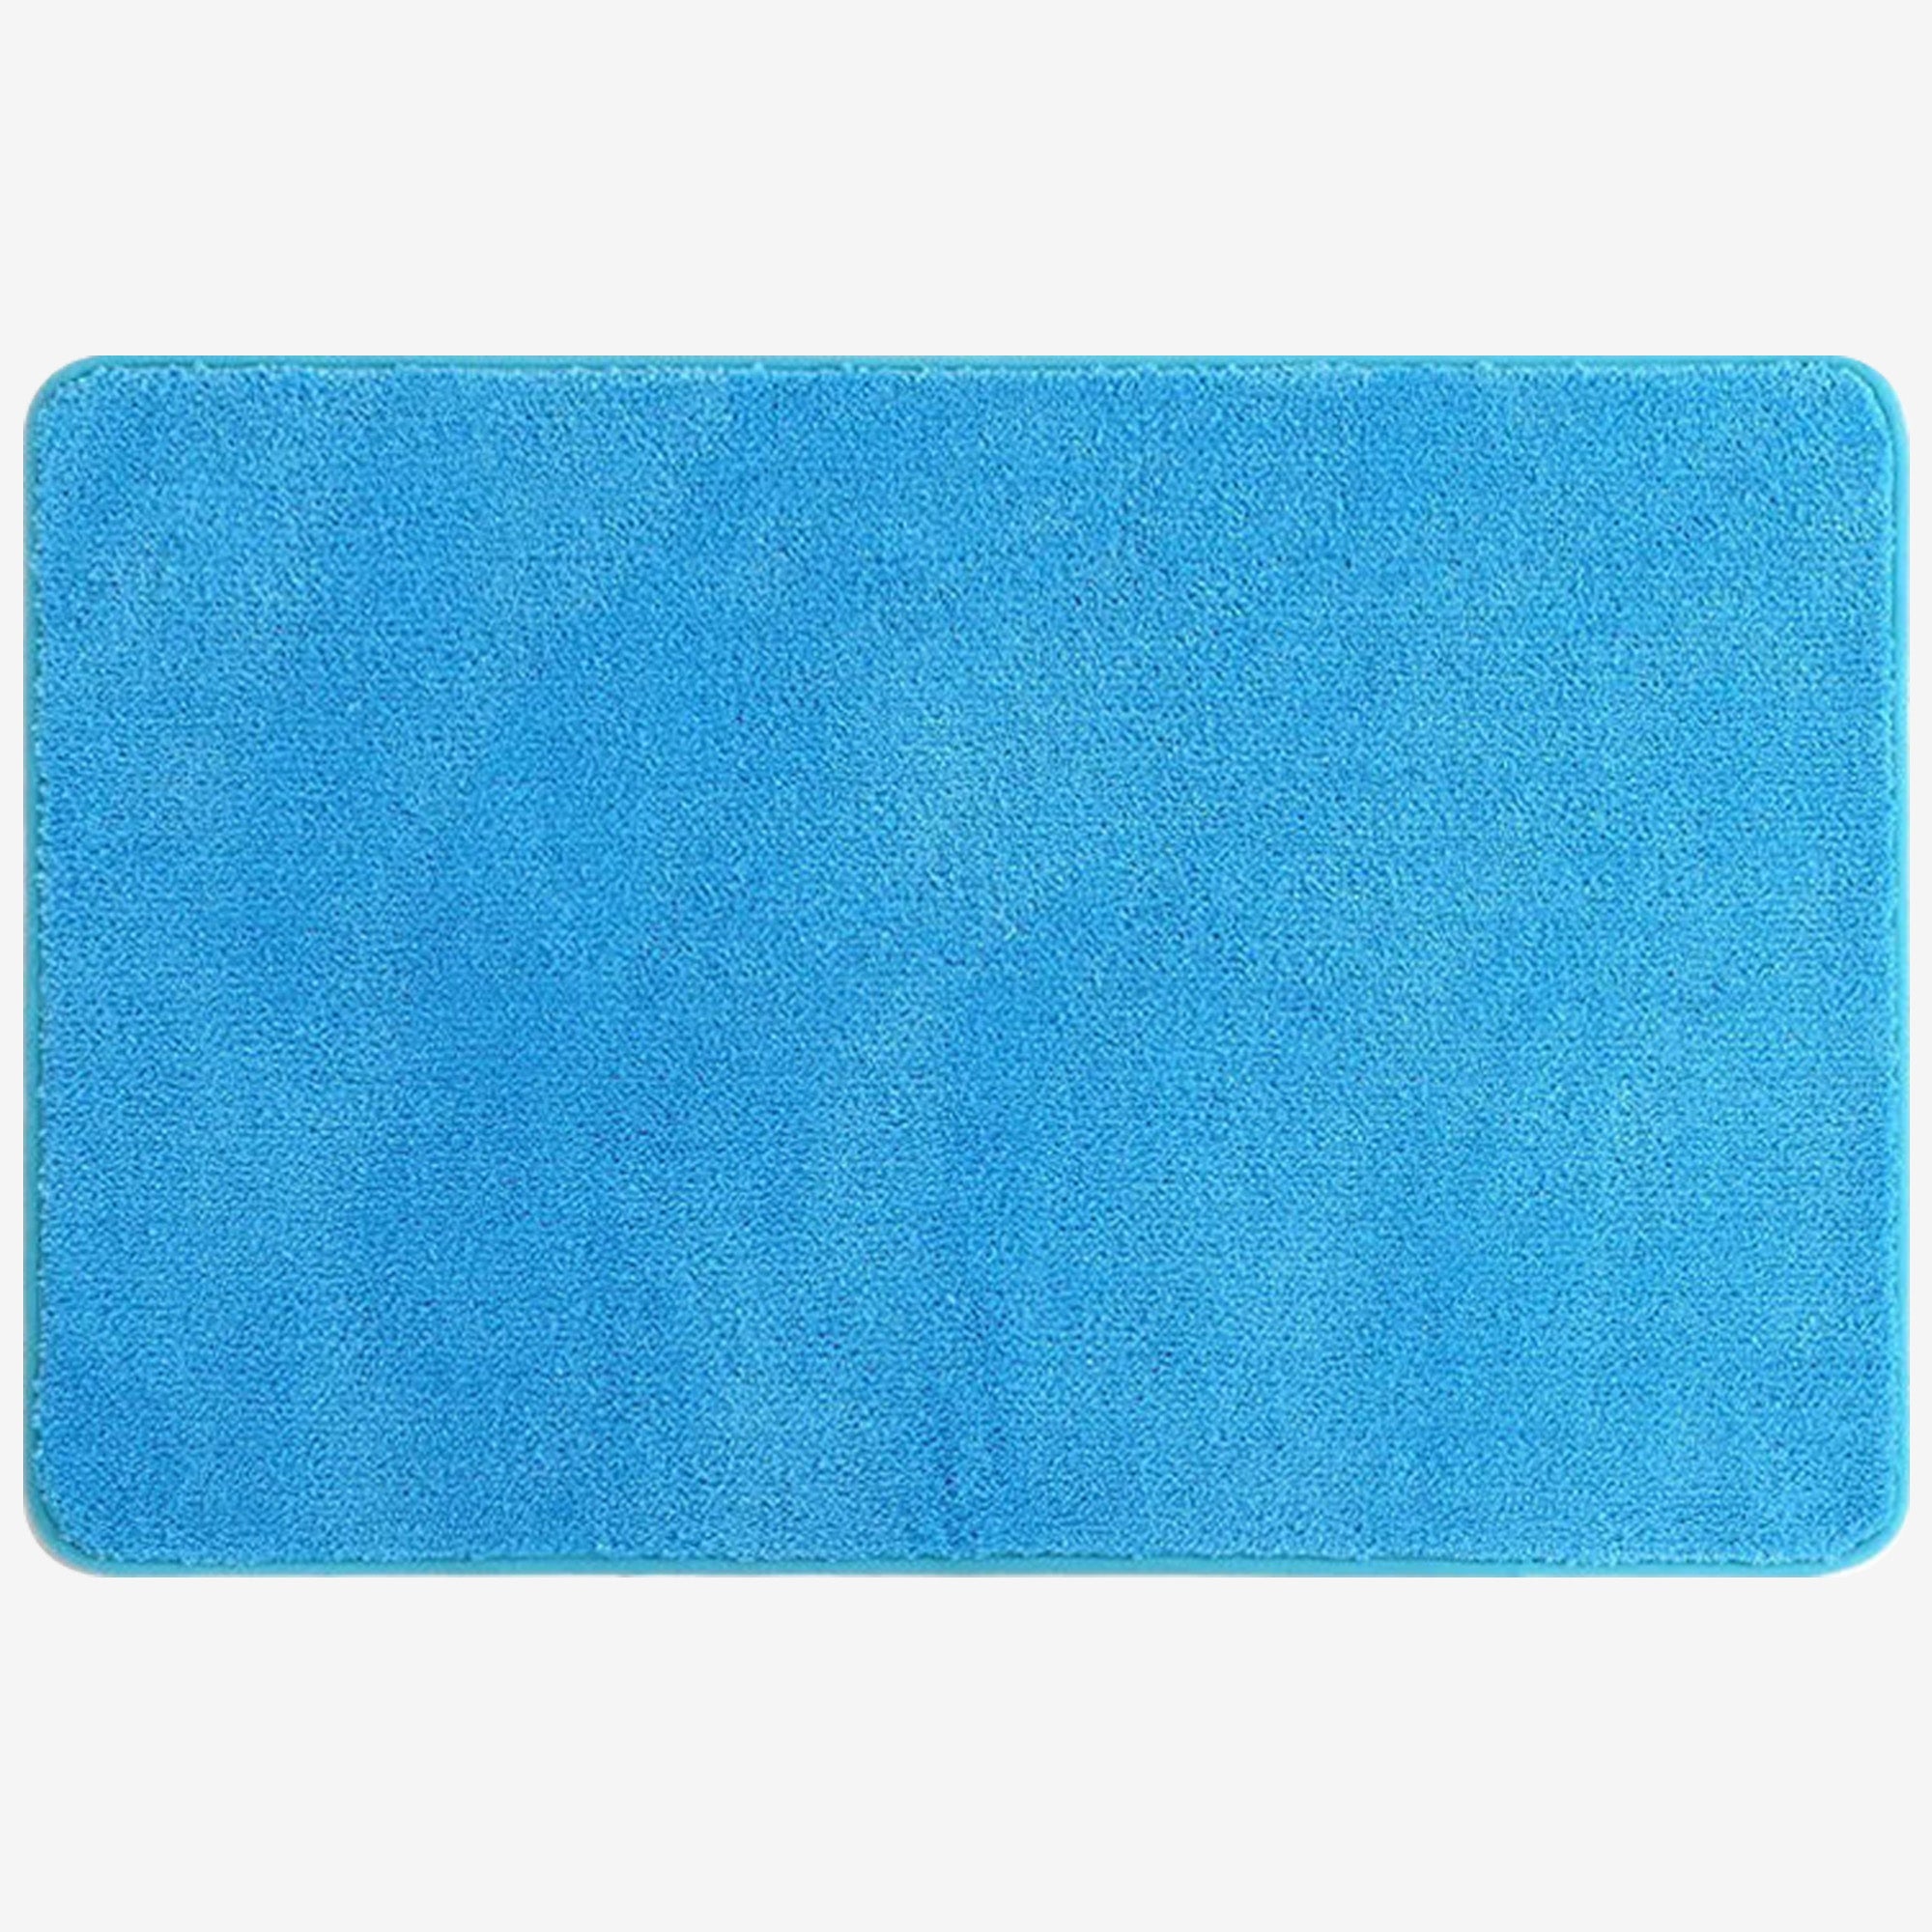 Blue Solid Tufted Bath Mat - Feblilac® Mat